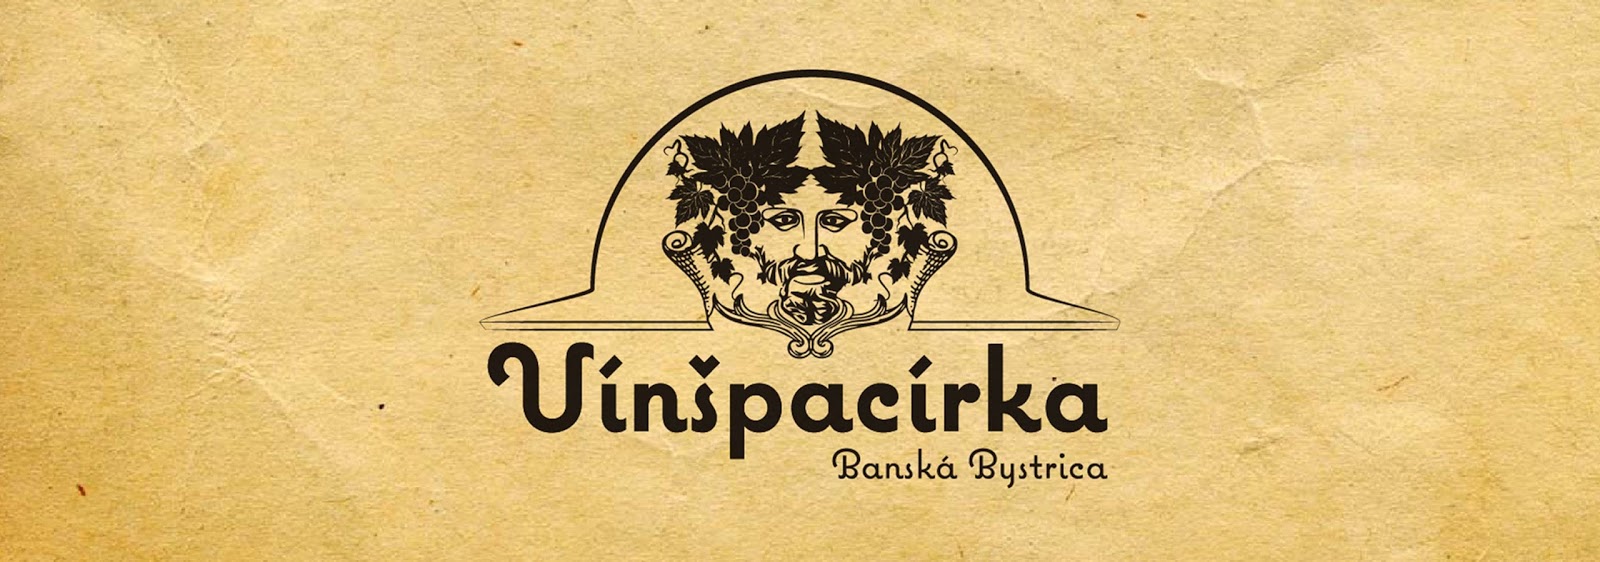 Vnpacrka 2018 Bansk Bystrica - 5. ronk